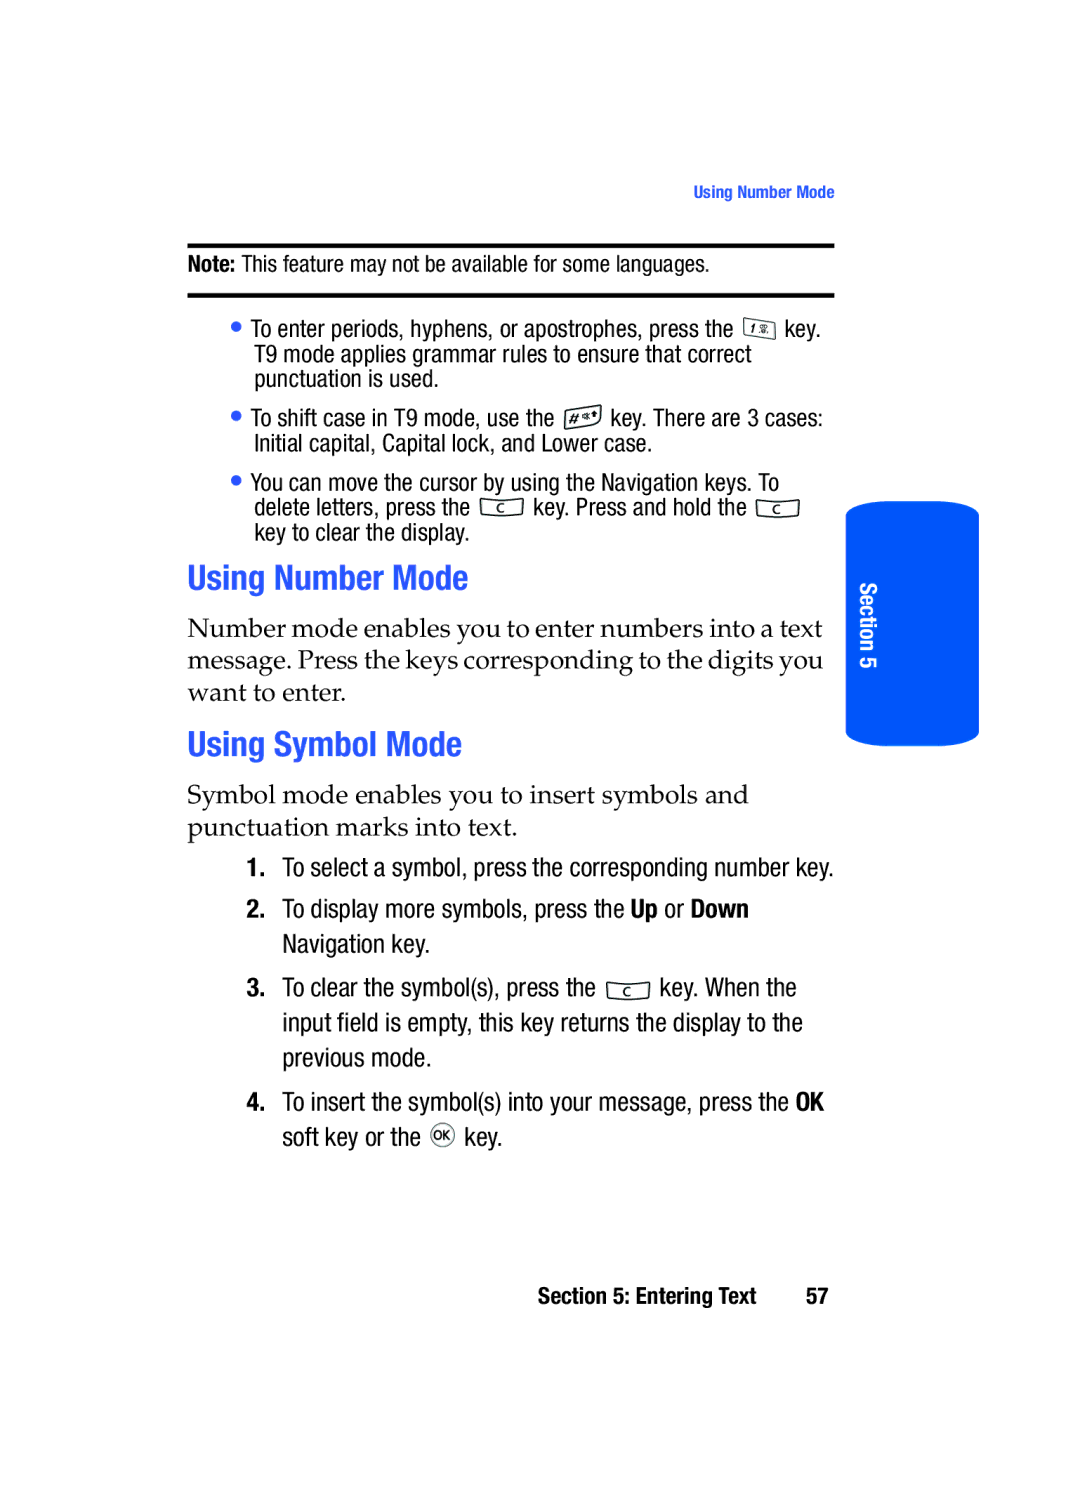 Samsung SGH-T519 manual Using Number Mode, Using Symbol Mode 